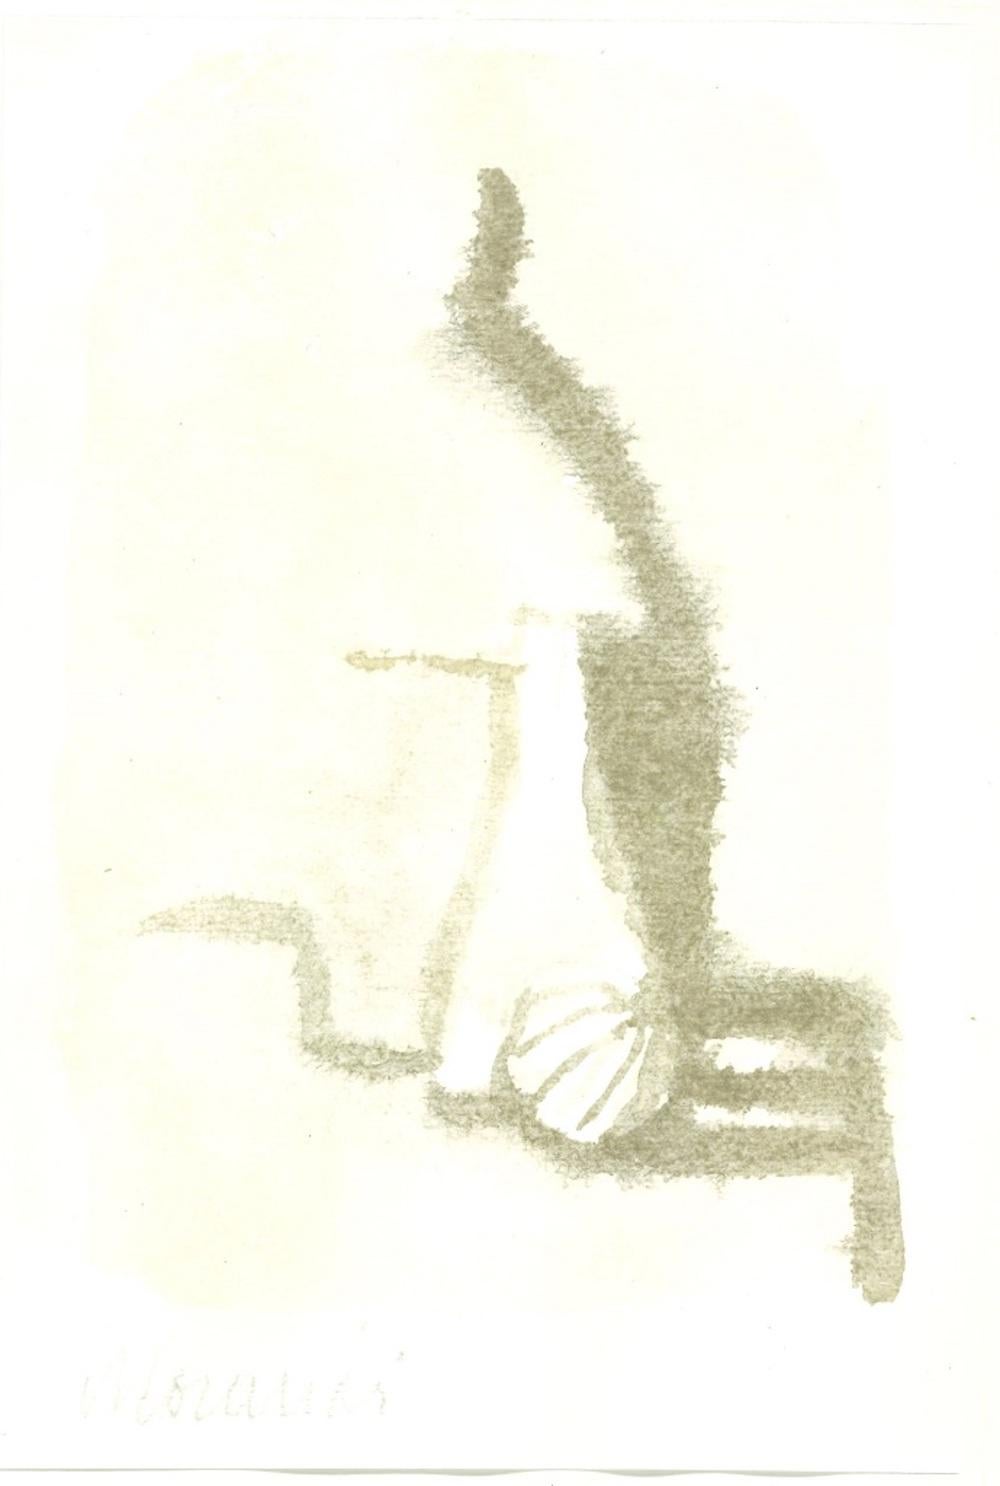 Image dimensions: 21 x 14 cm.

Still Life is a superb original offset print, reproducing the original watercolor by Giorgio Morandi.

Signature by the artist is perfectly reproduced on plate.

From the volume "L'Opera grafica di Giorgio Morandi",